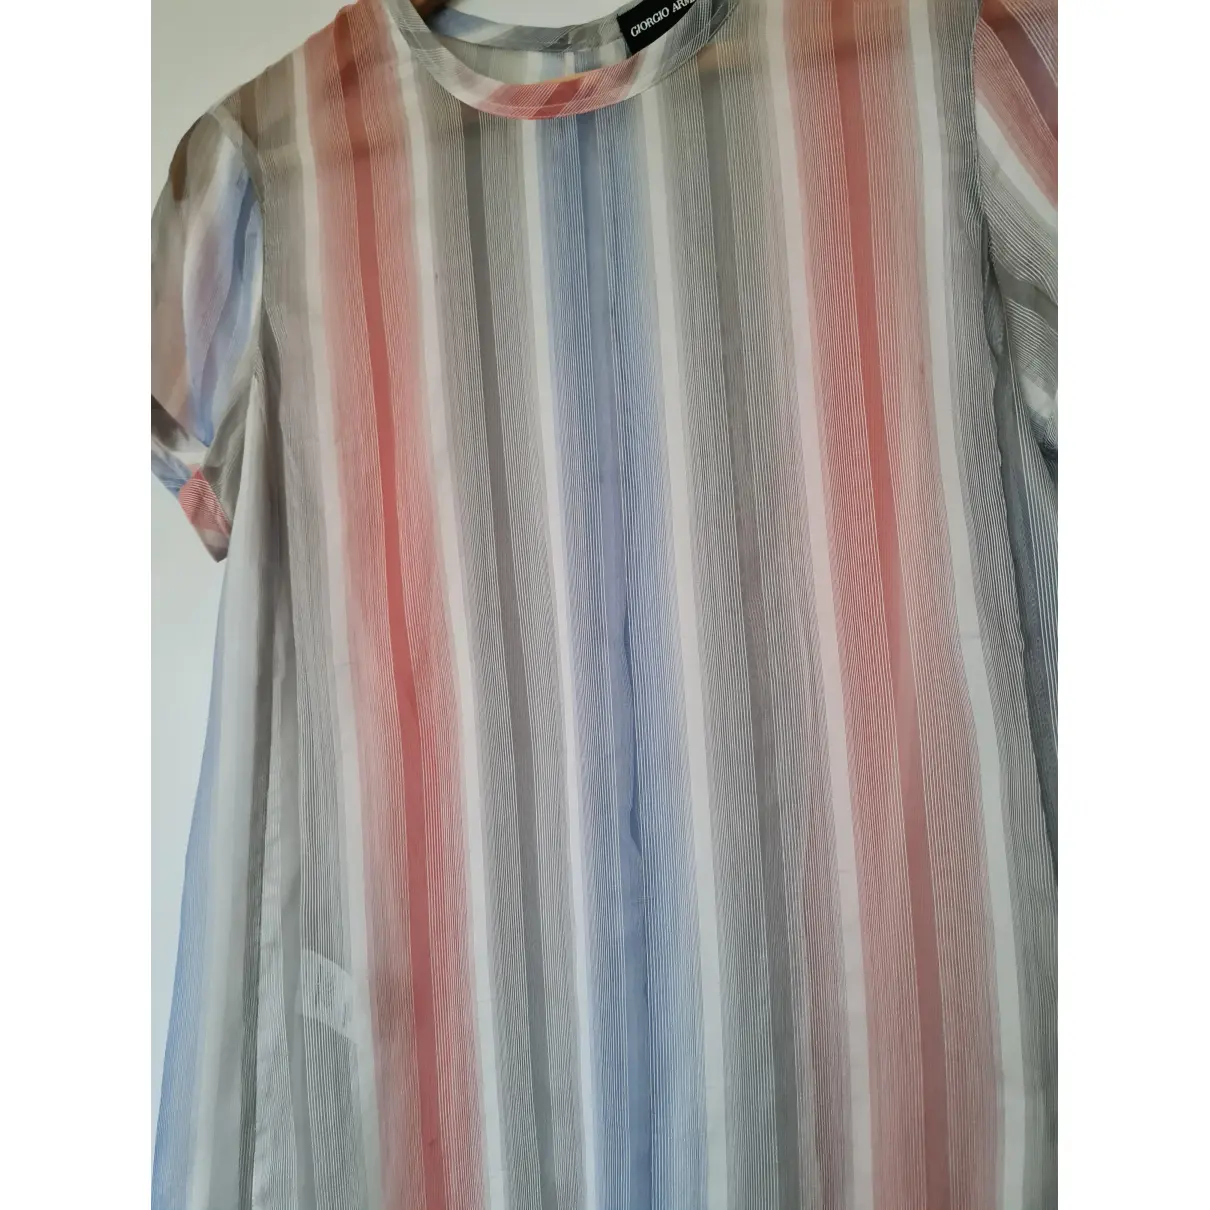 Buy Giorgio Armani Silk blouse online - Vintage